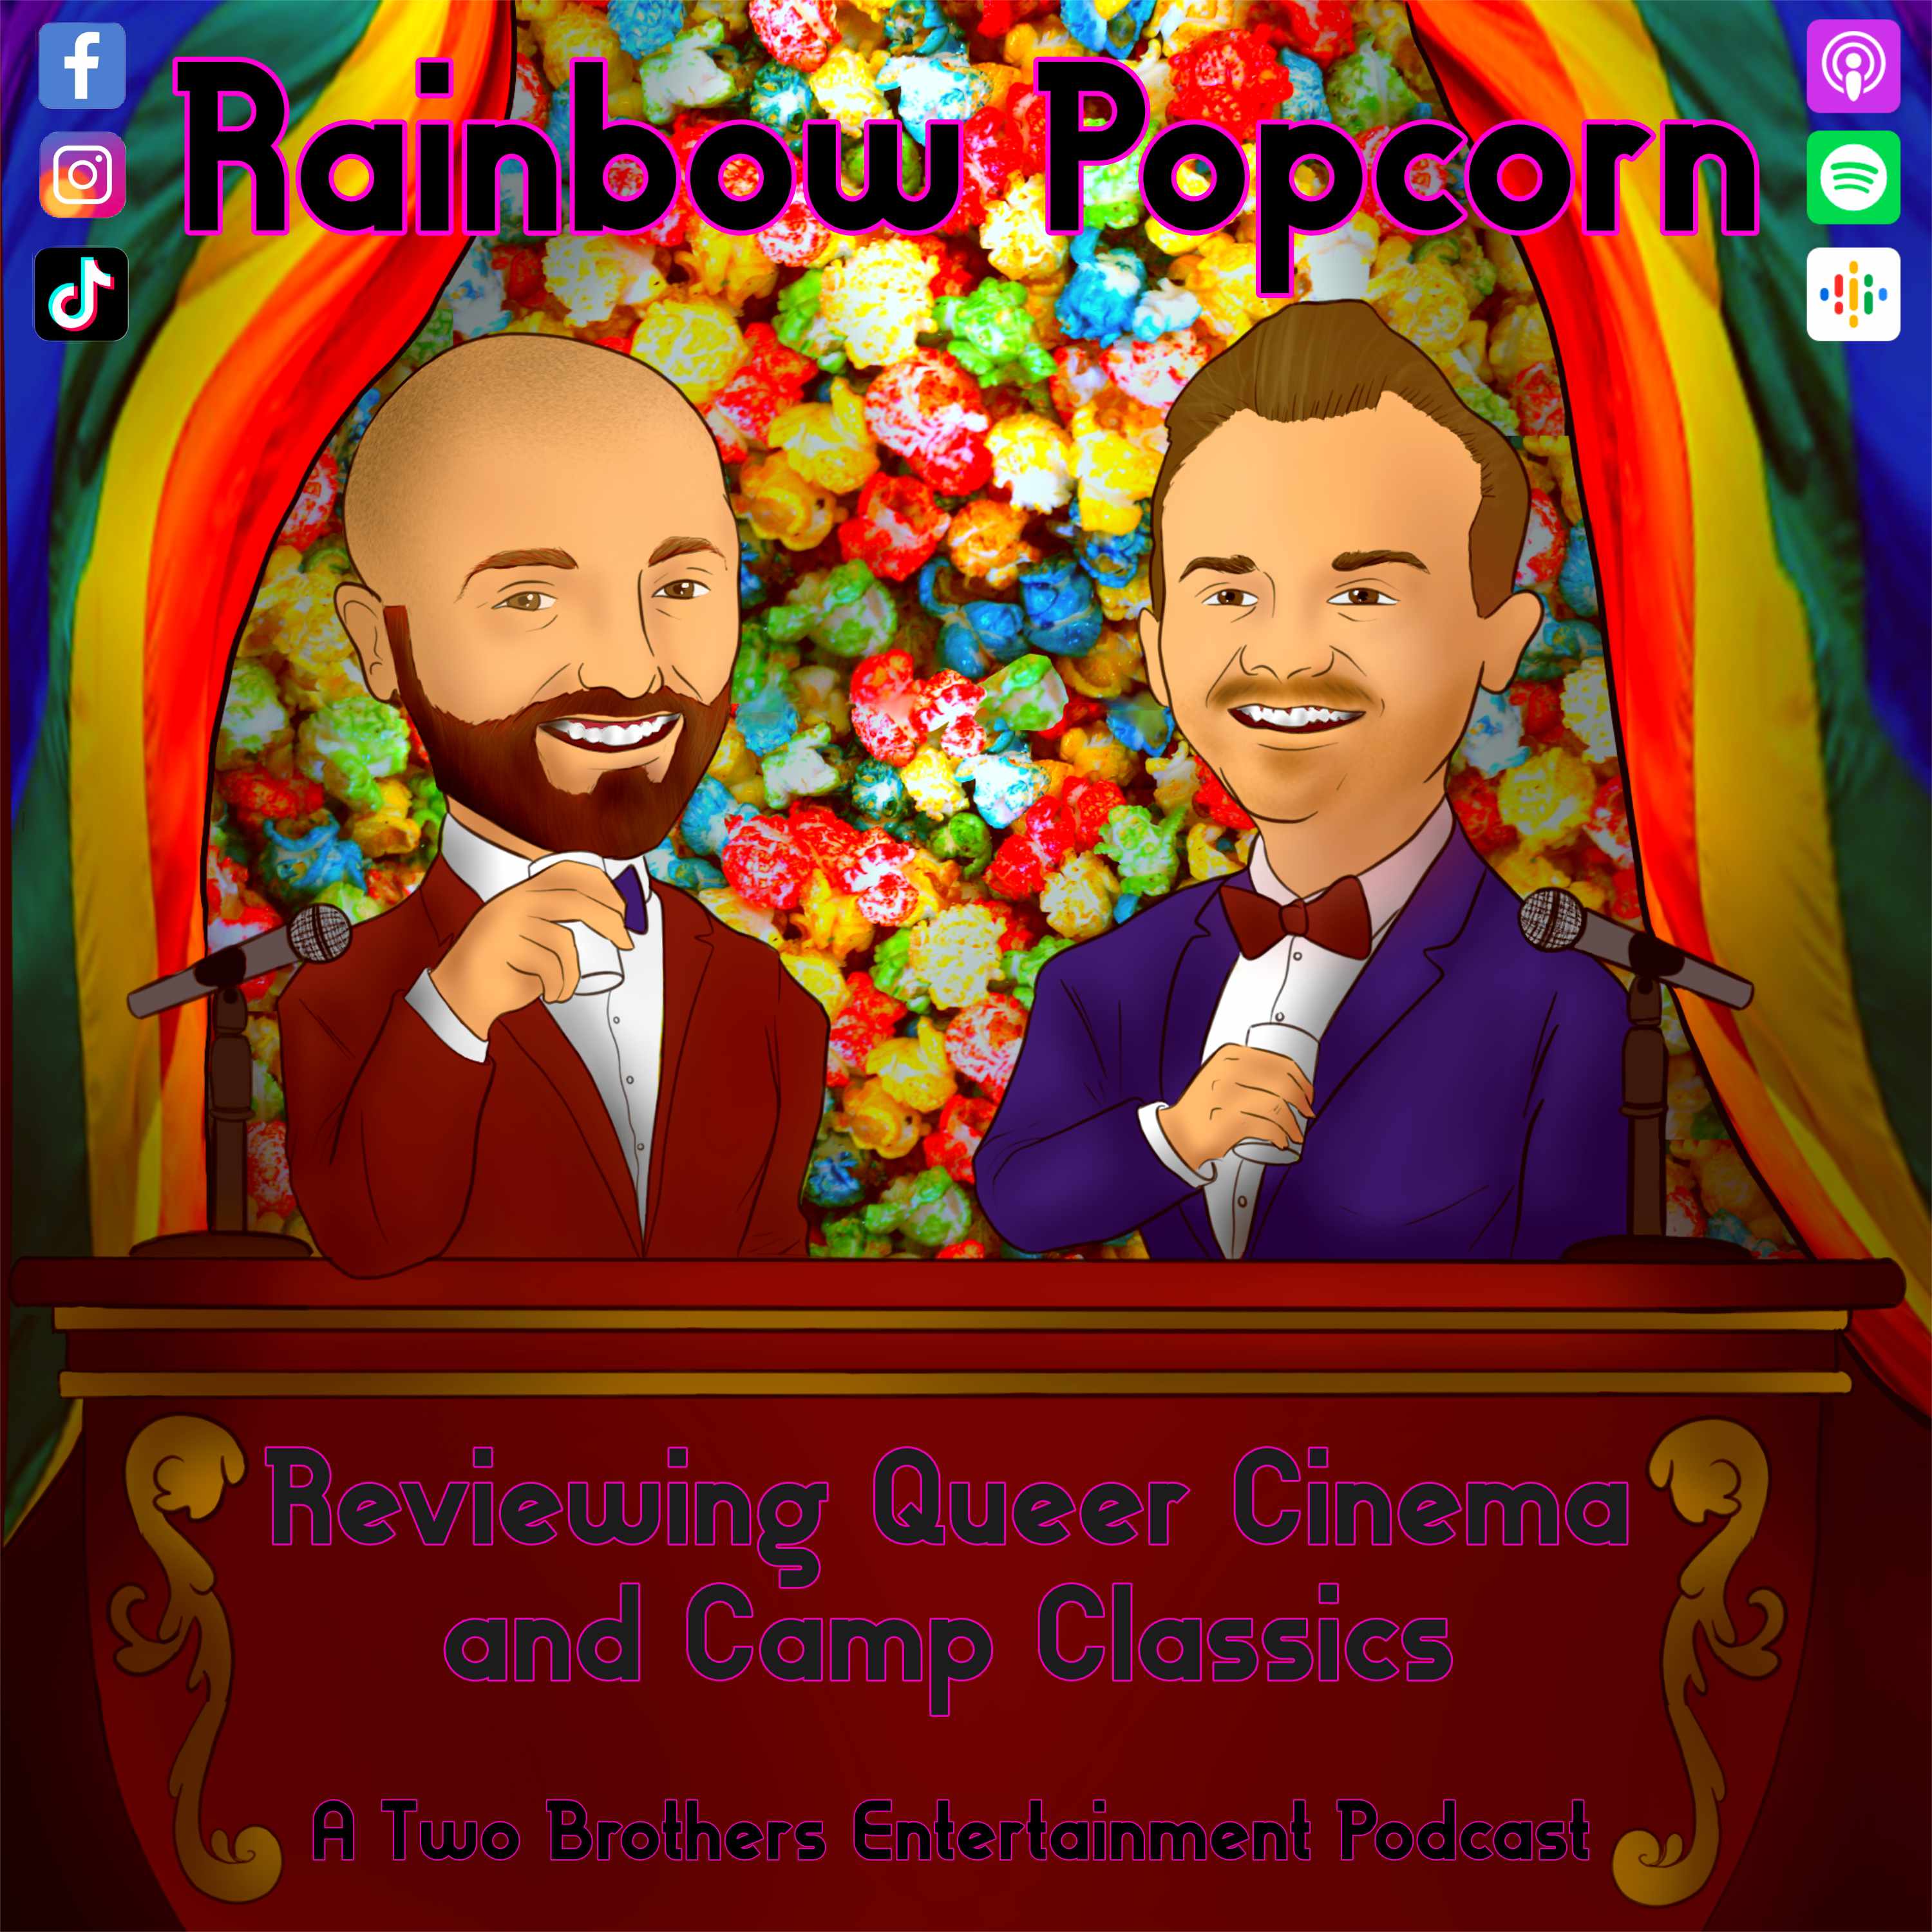 Artwork for Rainbow Popcorn